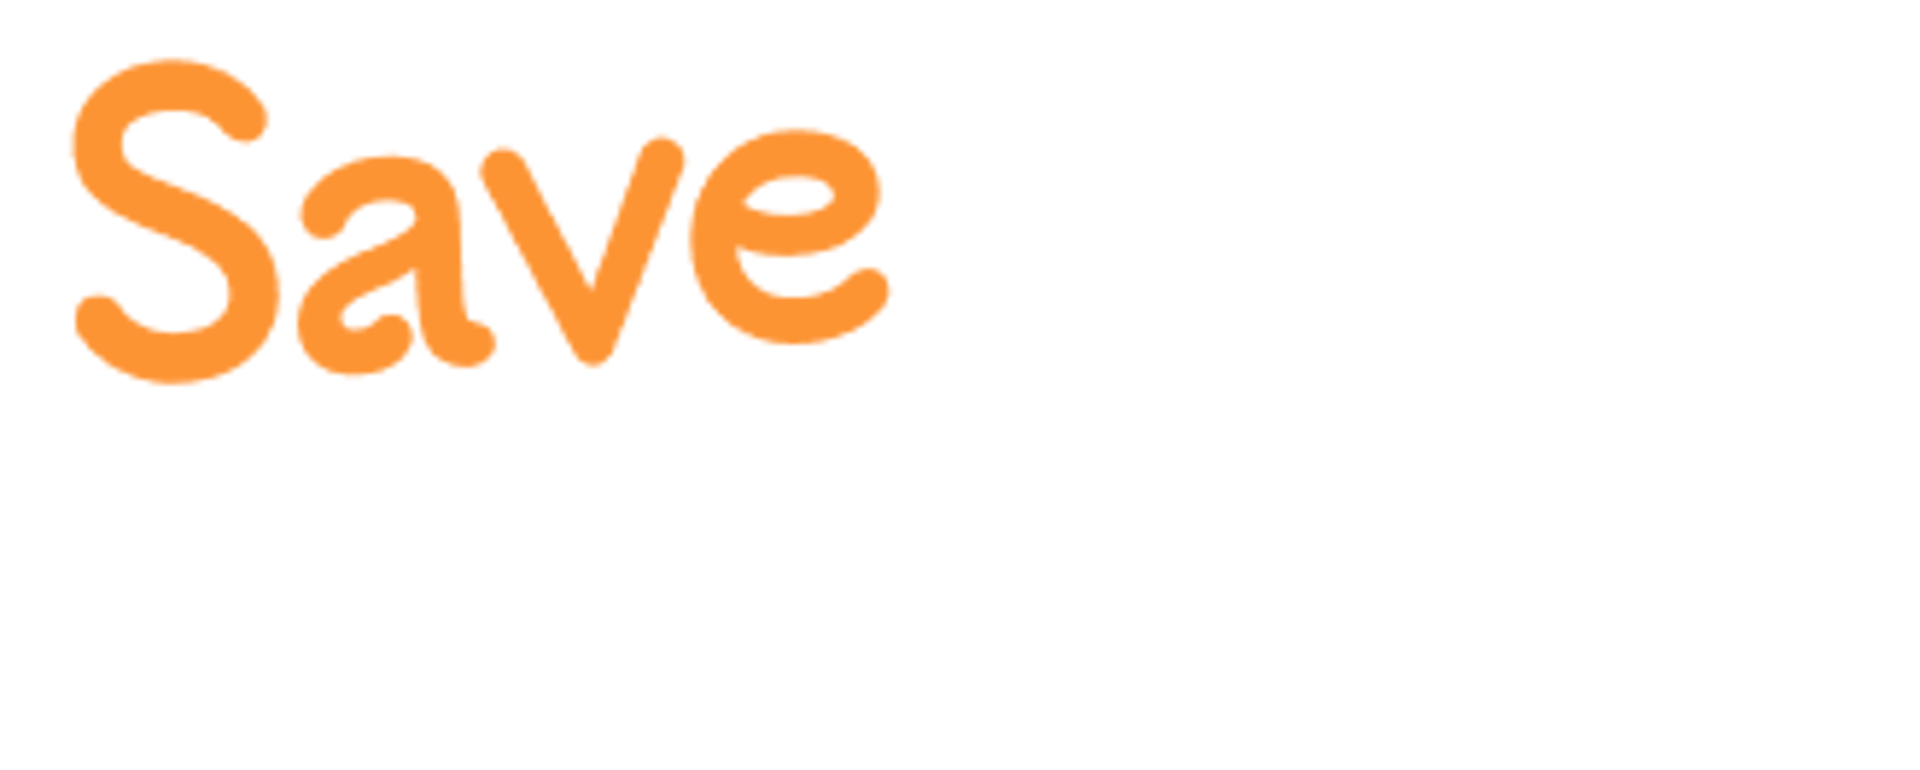 Save the Children - Charity WordPress Theme with Donations Logo | Cmsmasters studio